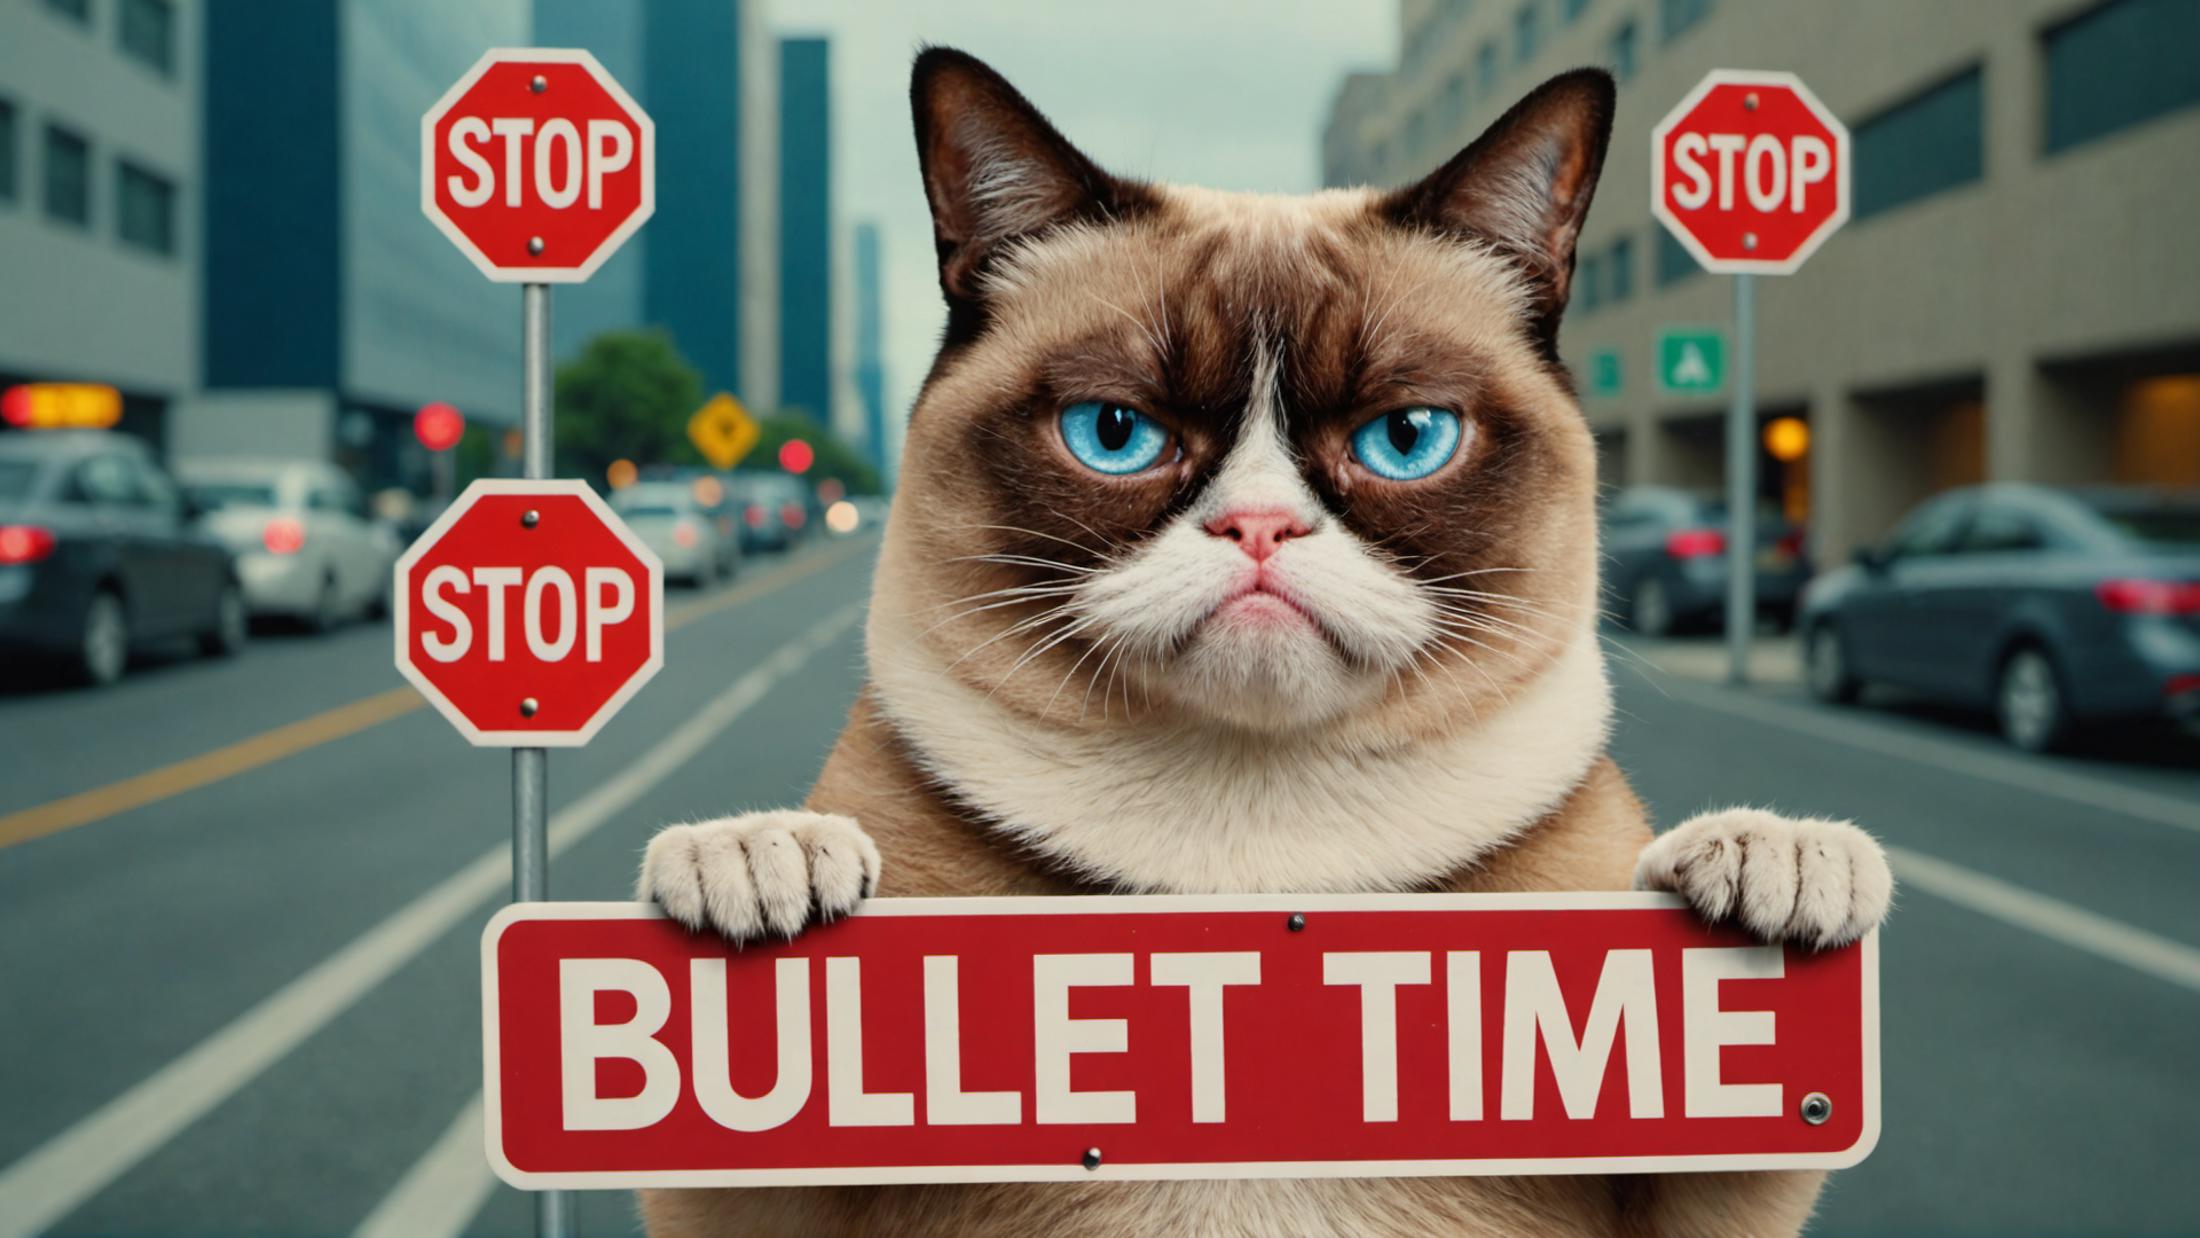 Memes XL "Bullet Time" image by skratch4merz916